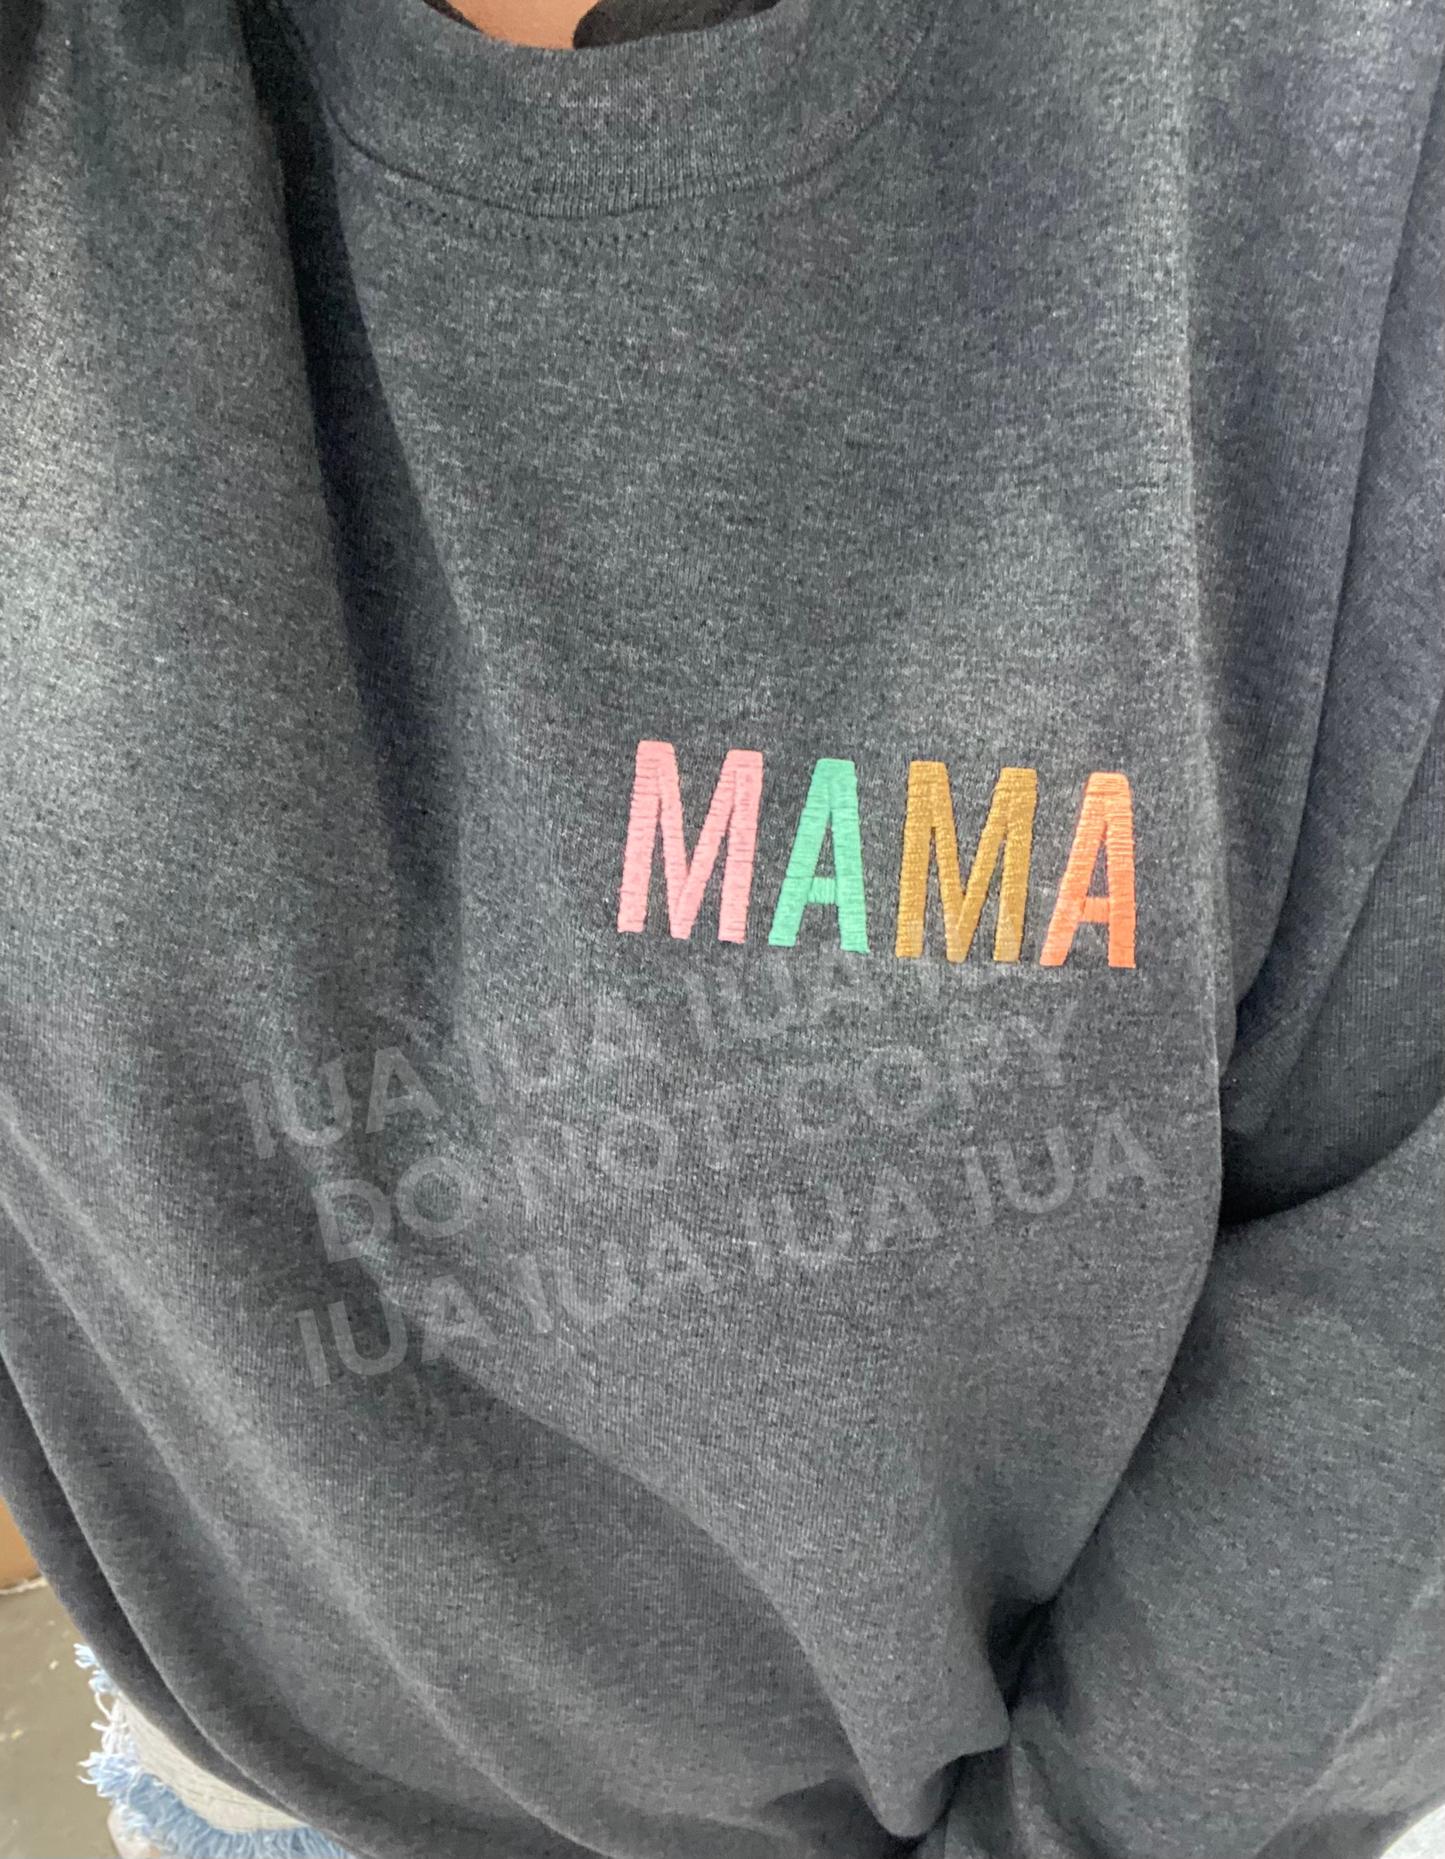 MAMA Embroidered Crew Sweatshirt